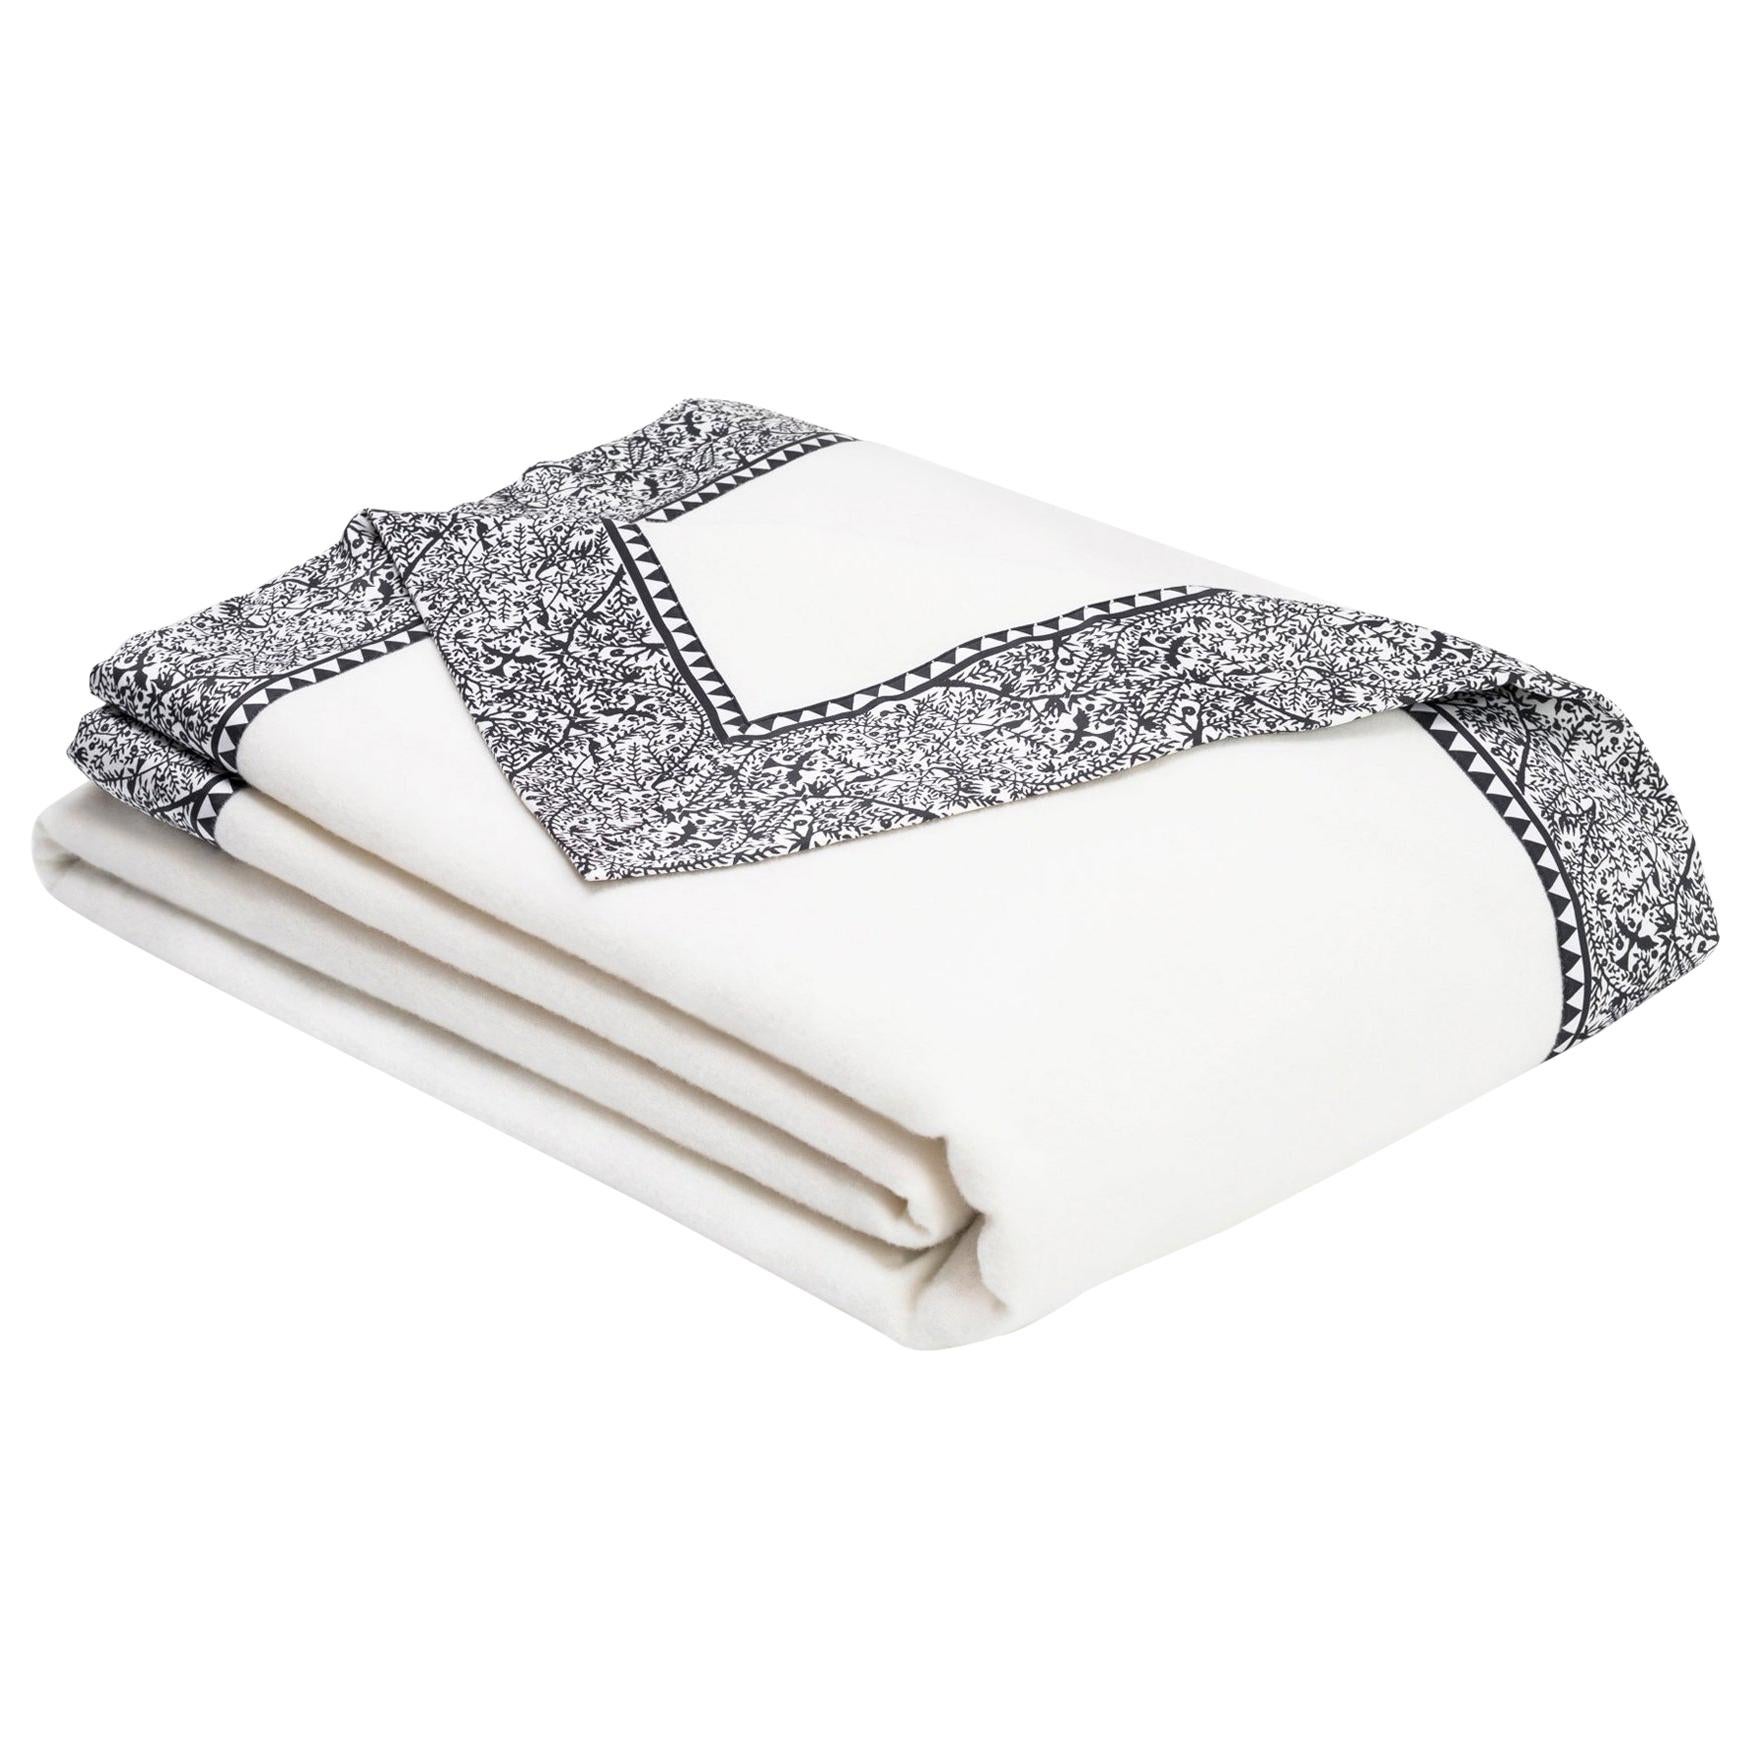 Emilie Merino White Queen-Size Blanket with Custom Print Border by JG Switzer